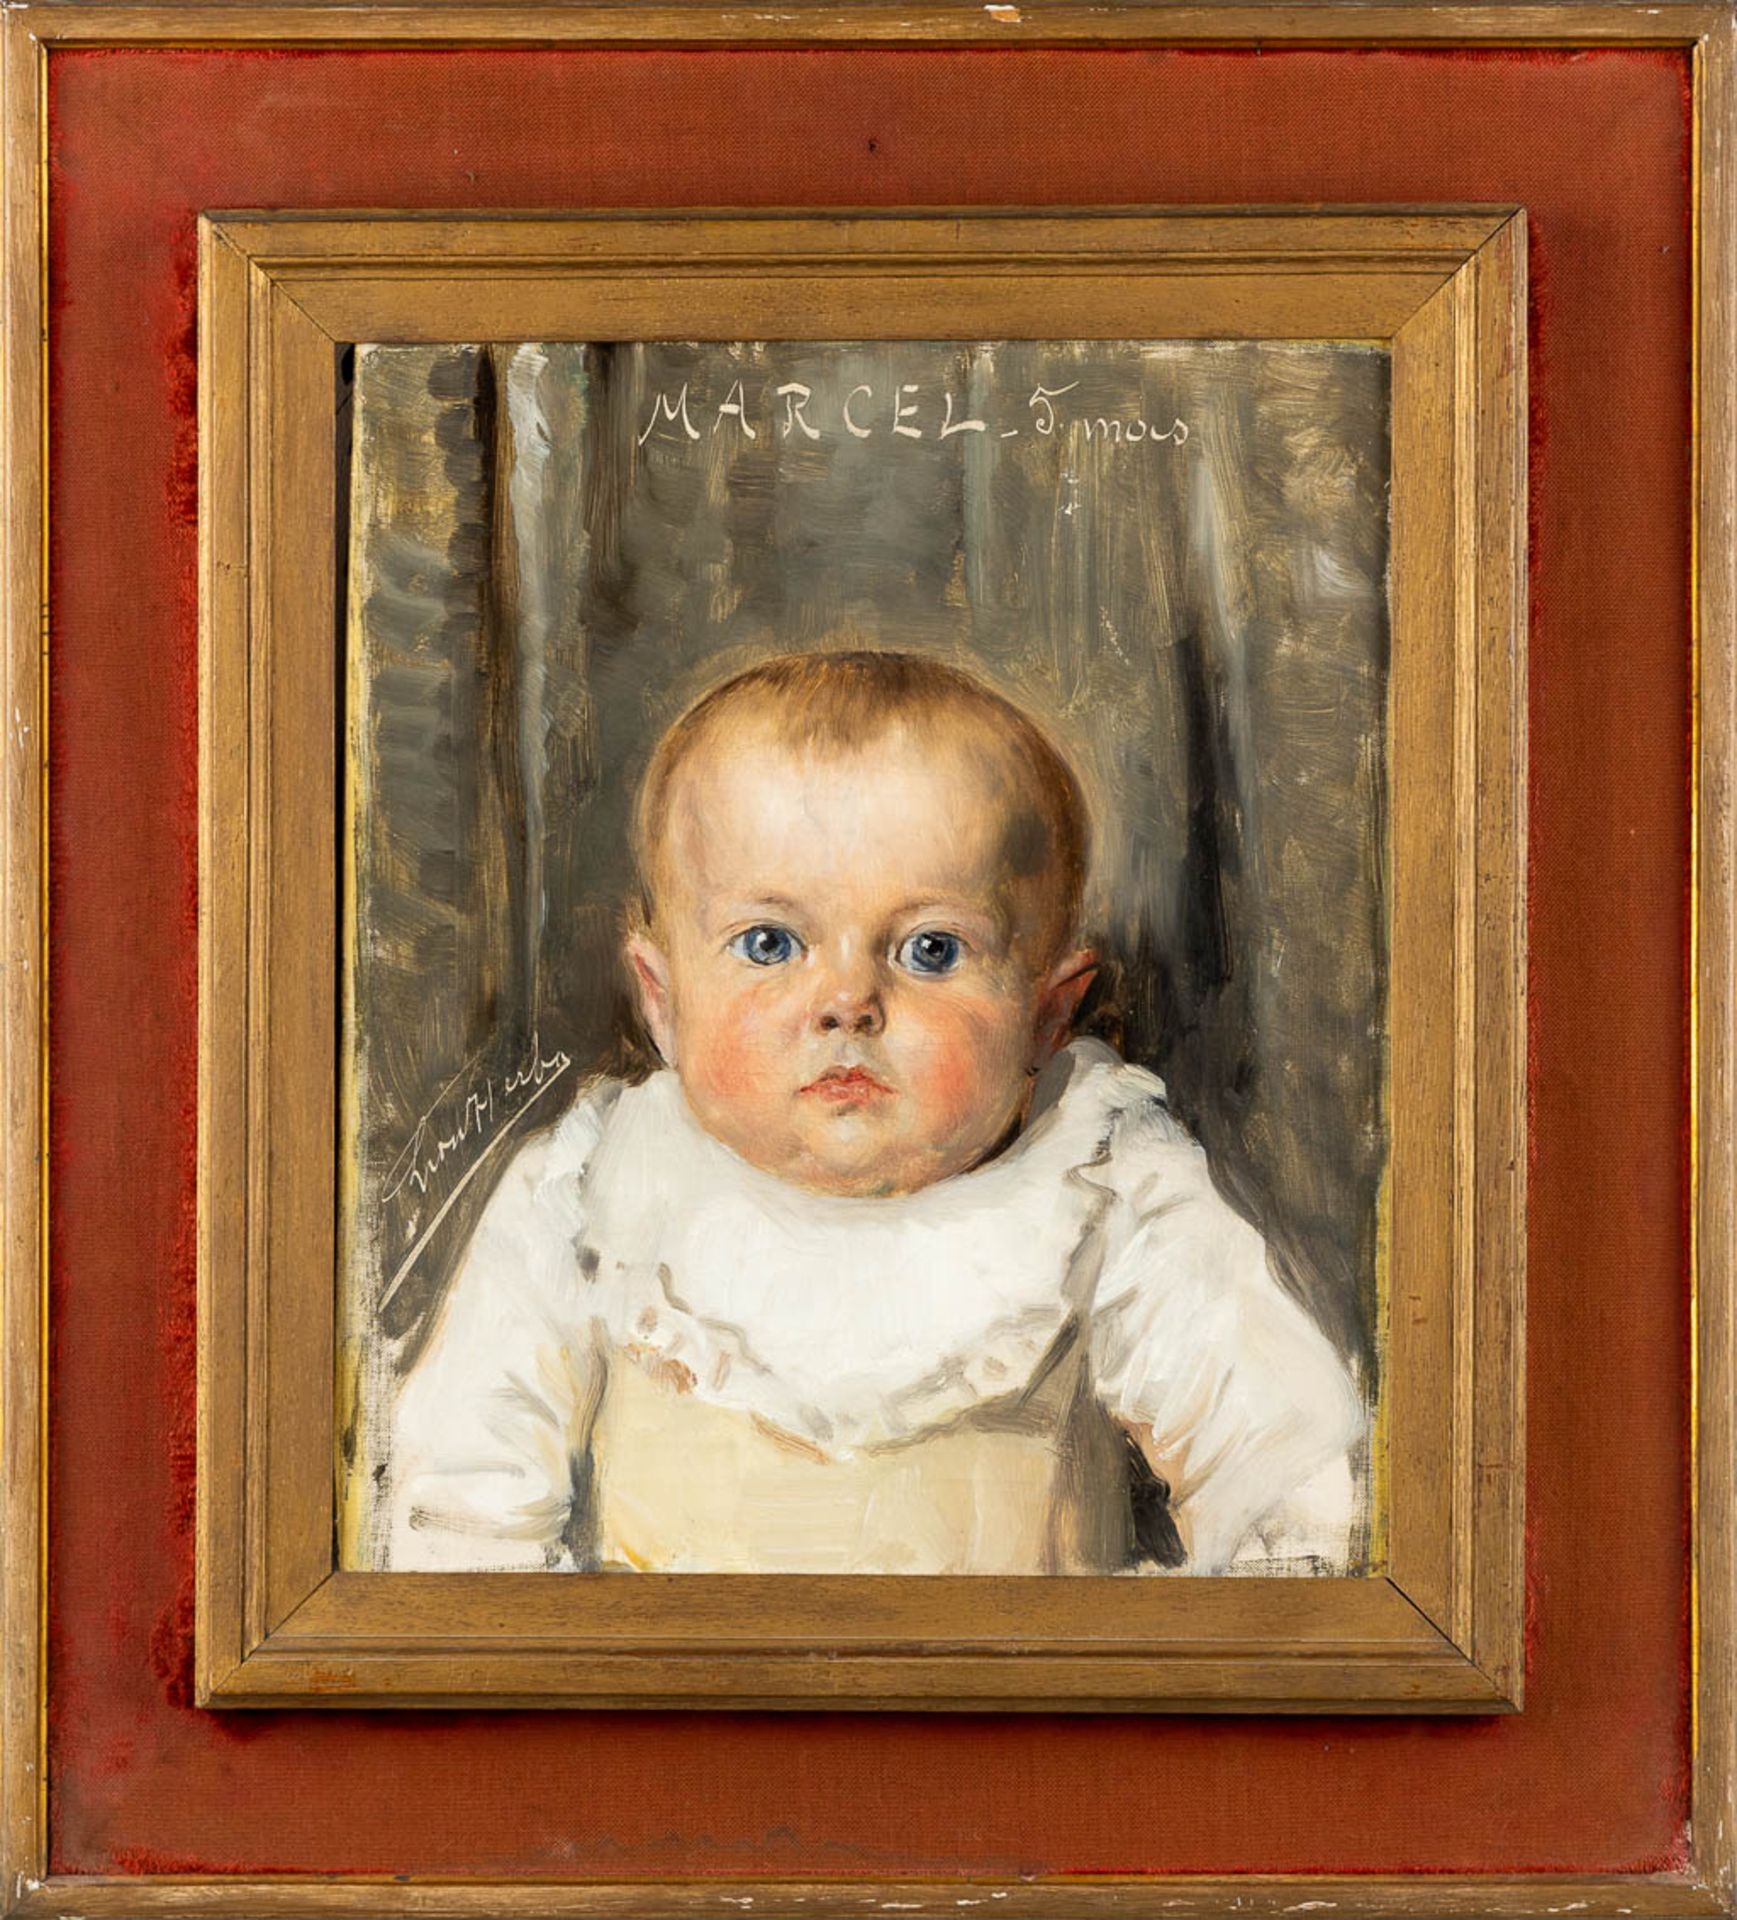 Léon HERBO (1850-1907) 'Marcel - 5 mois' oil on canvas. (W:32 x H:38 cm) - Image 3 of 7